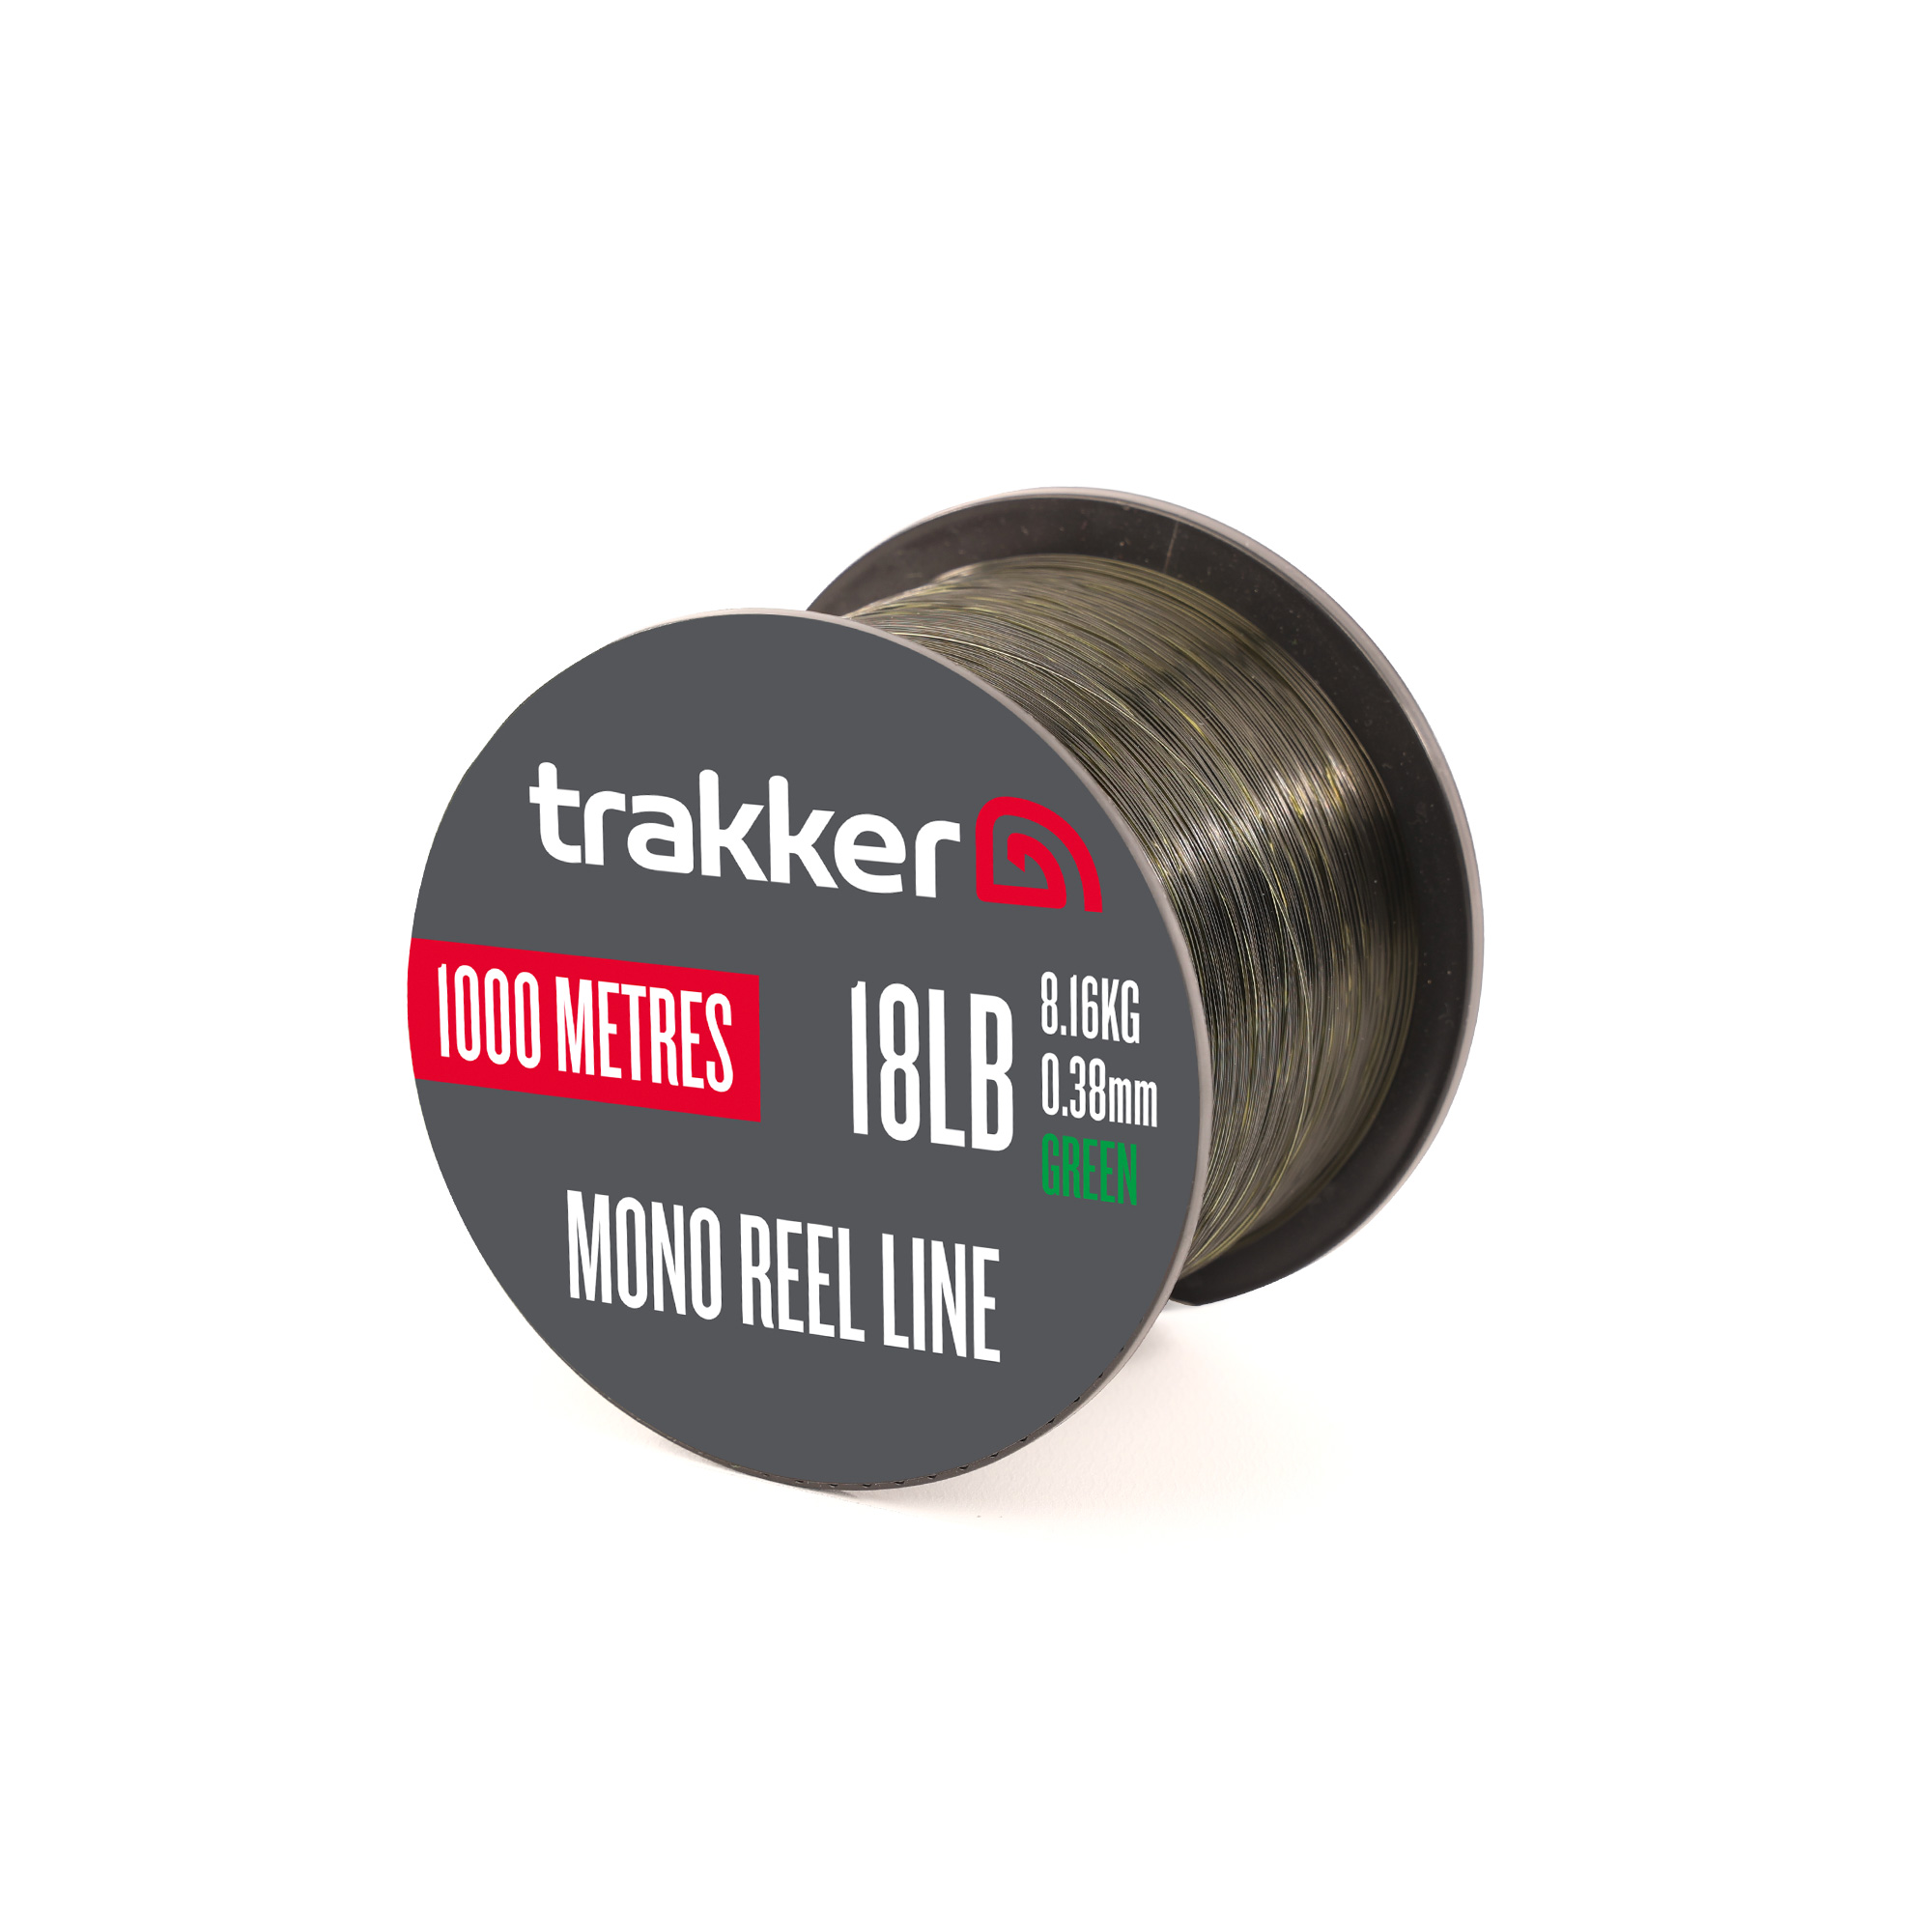 Trakker – Mono Reel Line (18lb)(8.16kg)(0.38mm)(1000m)